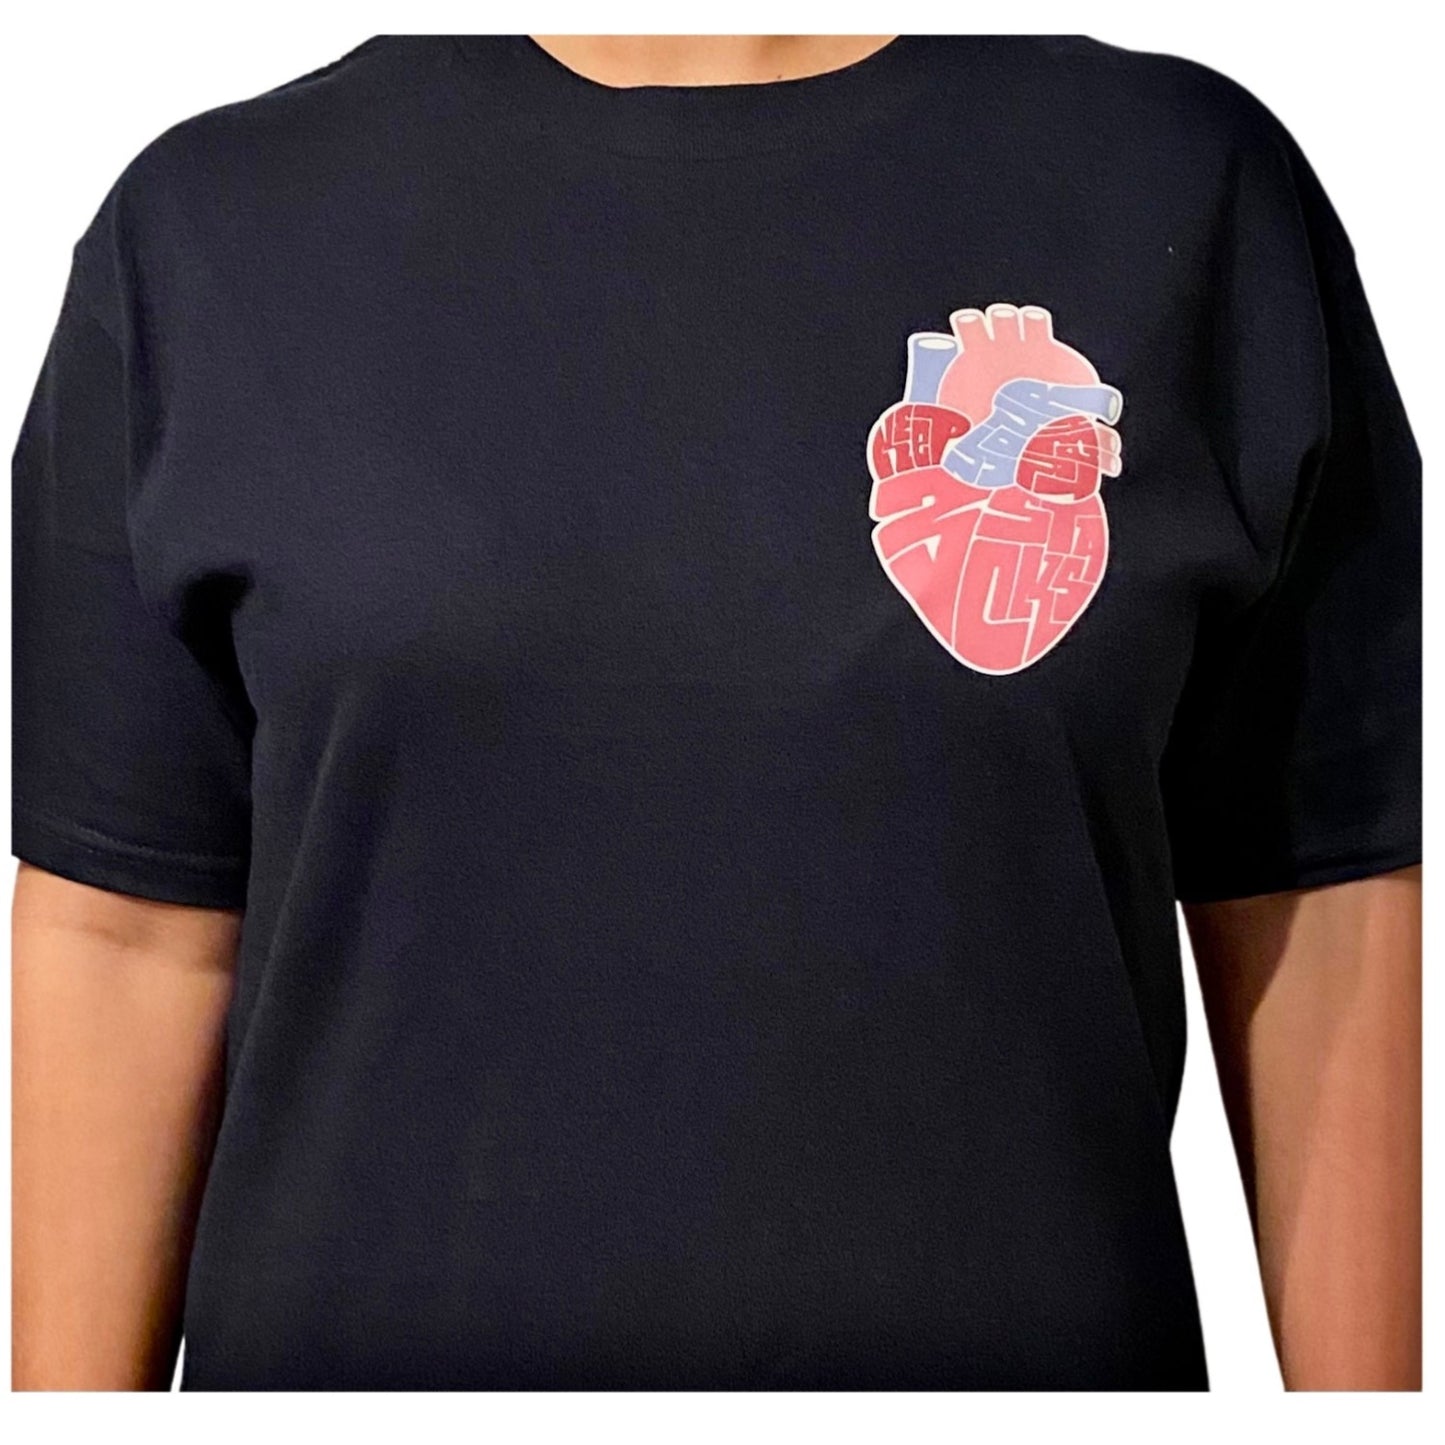 Keep Your Heart 3stacks Shirt